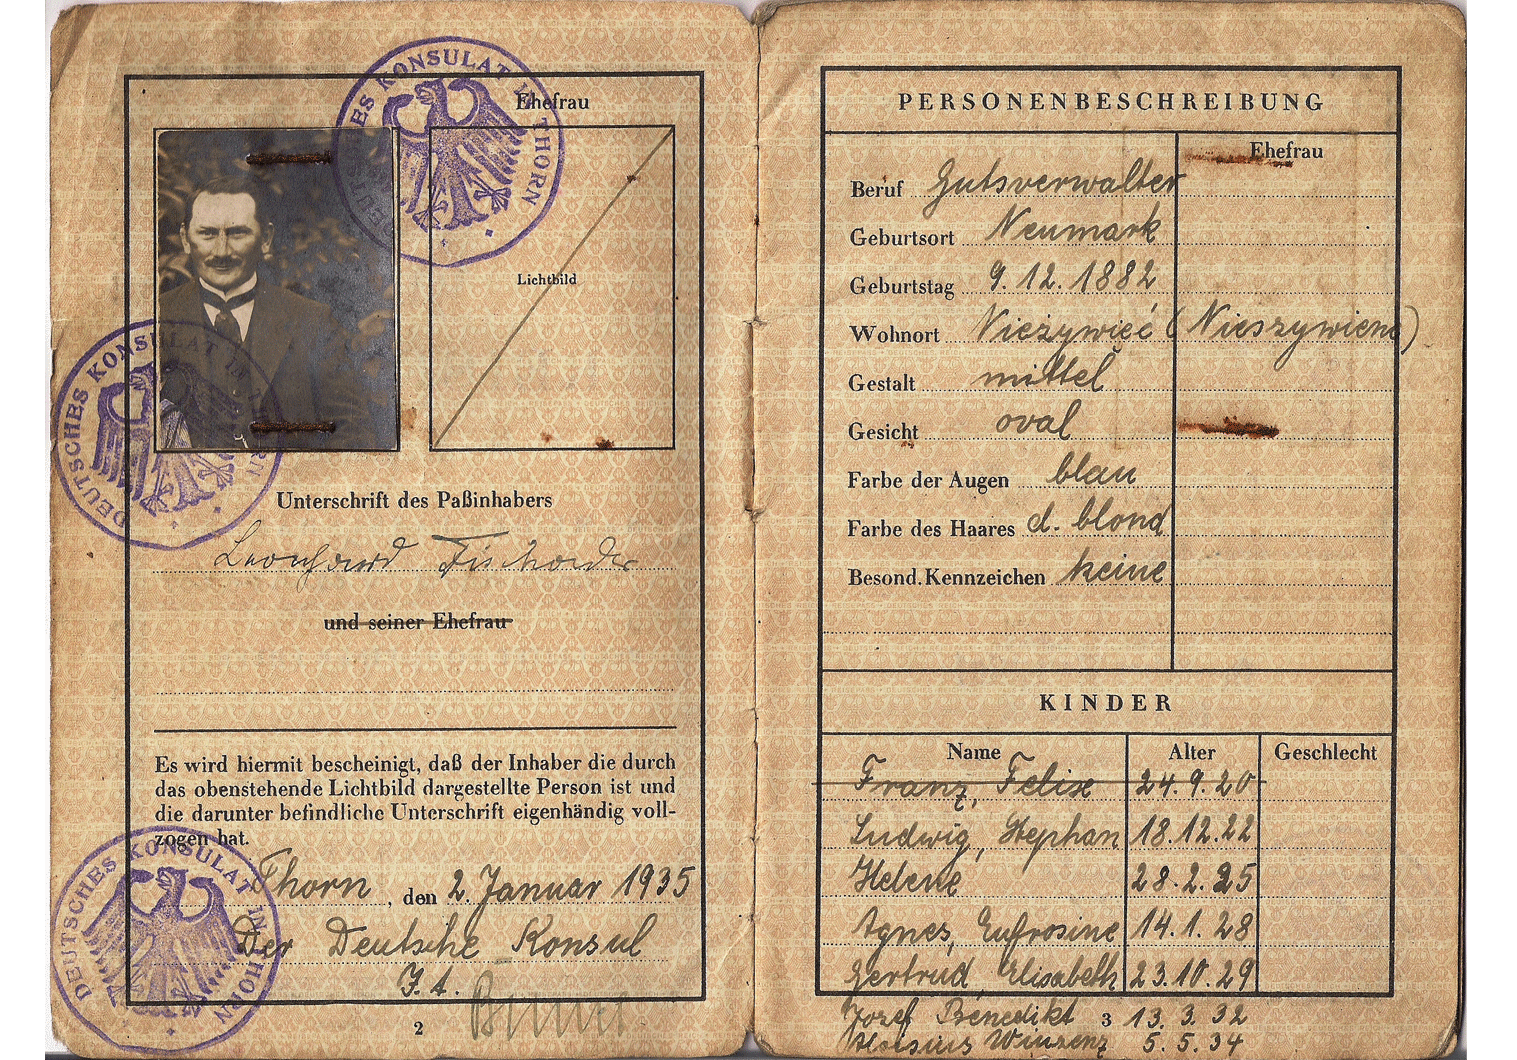 1935 German passport